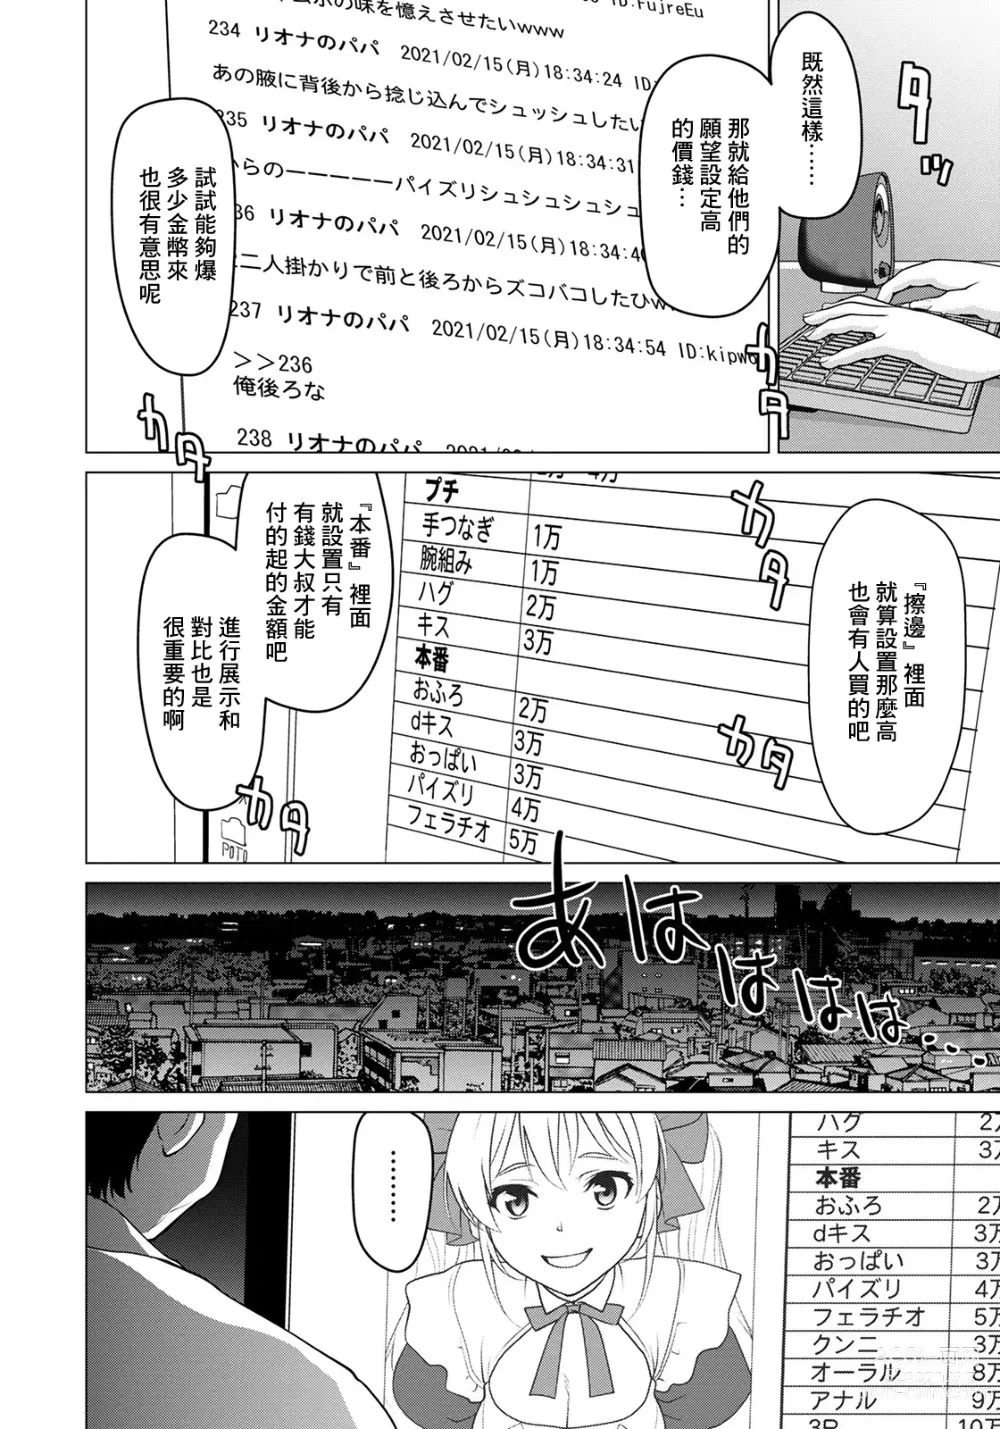 Page 4 of manga Papakatsu no Hime